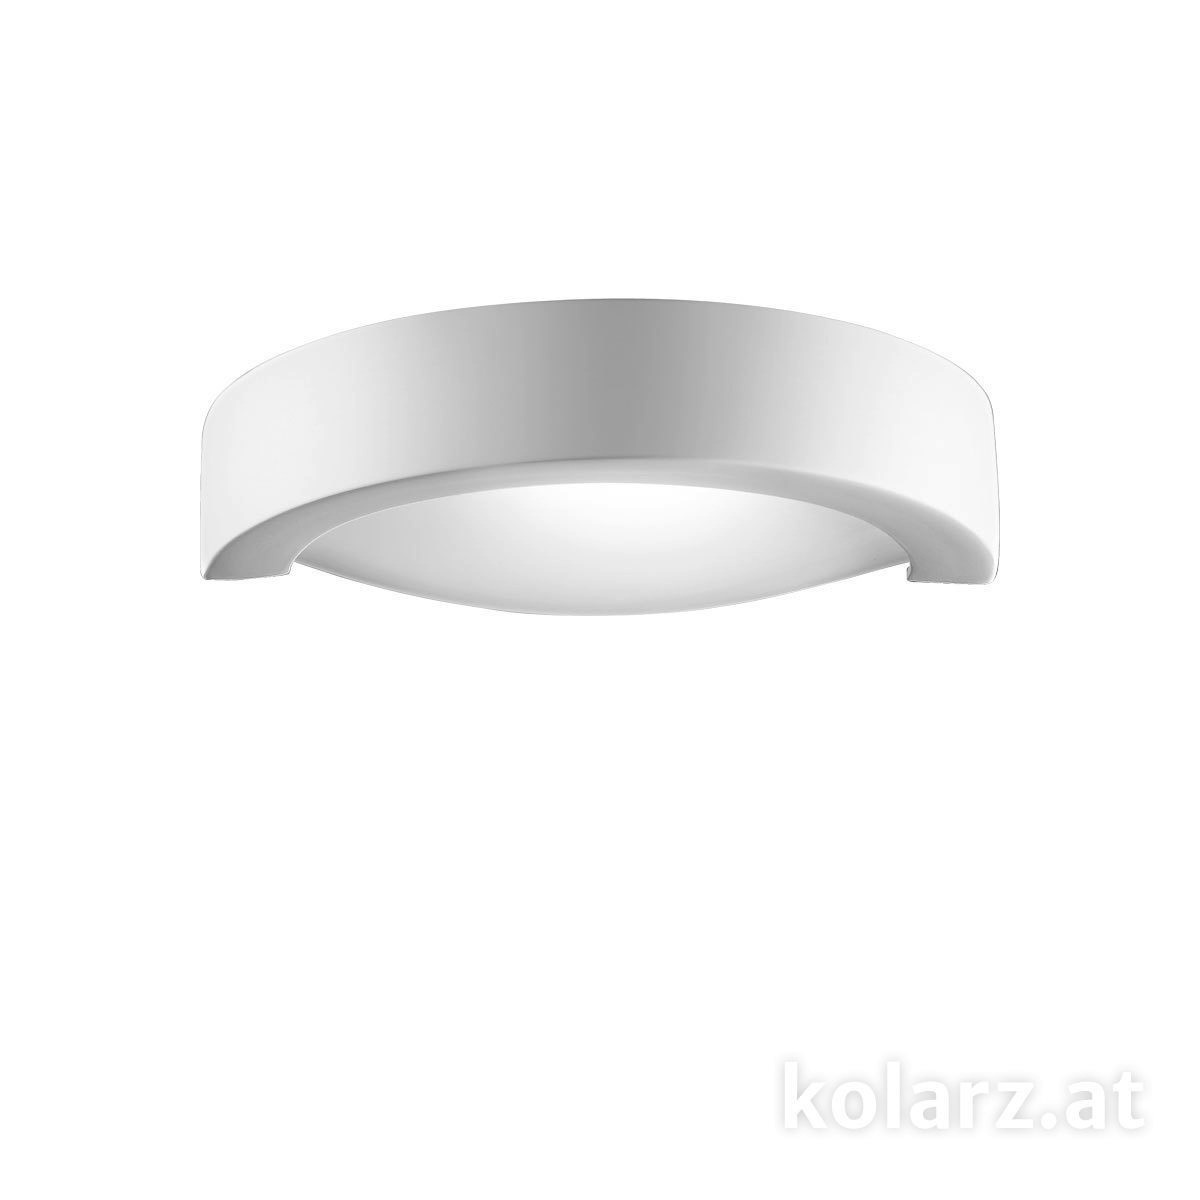 KOLARZ Leuchten Wandleuchten & Wandlampen fürs Bad von KOLARZ Leuchten Wandleuchte CASABLANCA 219.63.1